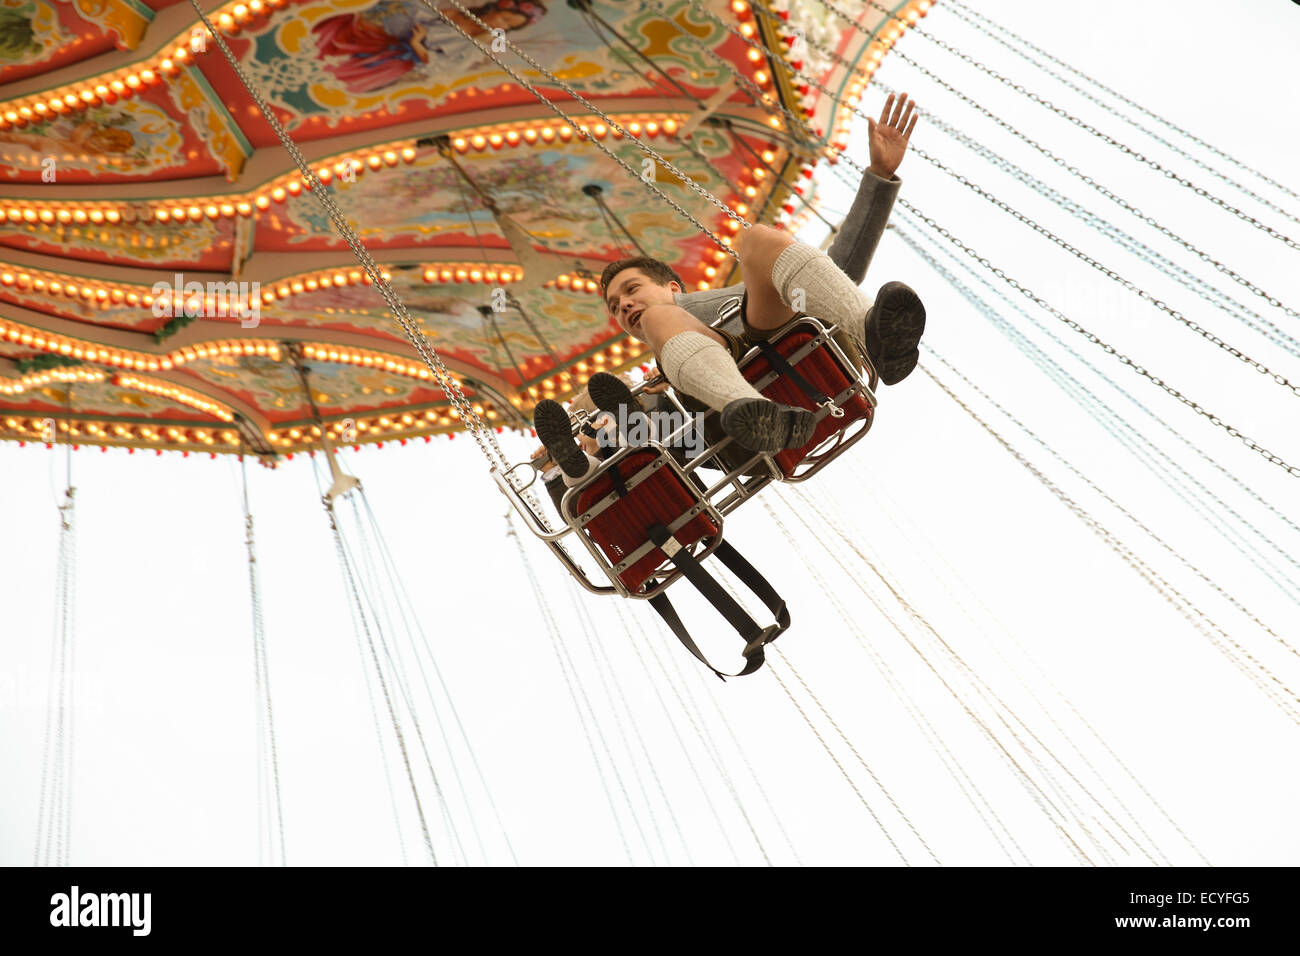 Hombre alemán niño volando mecedora ride theme park oktoberfest Foto de stock